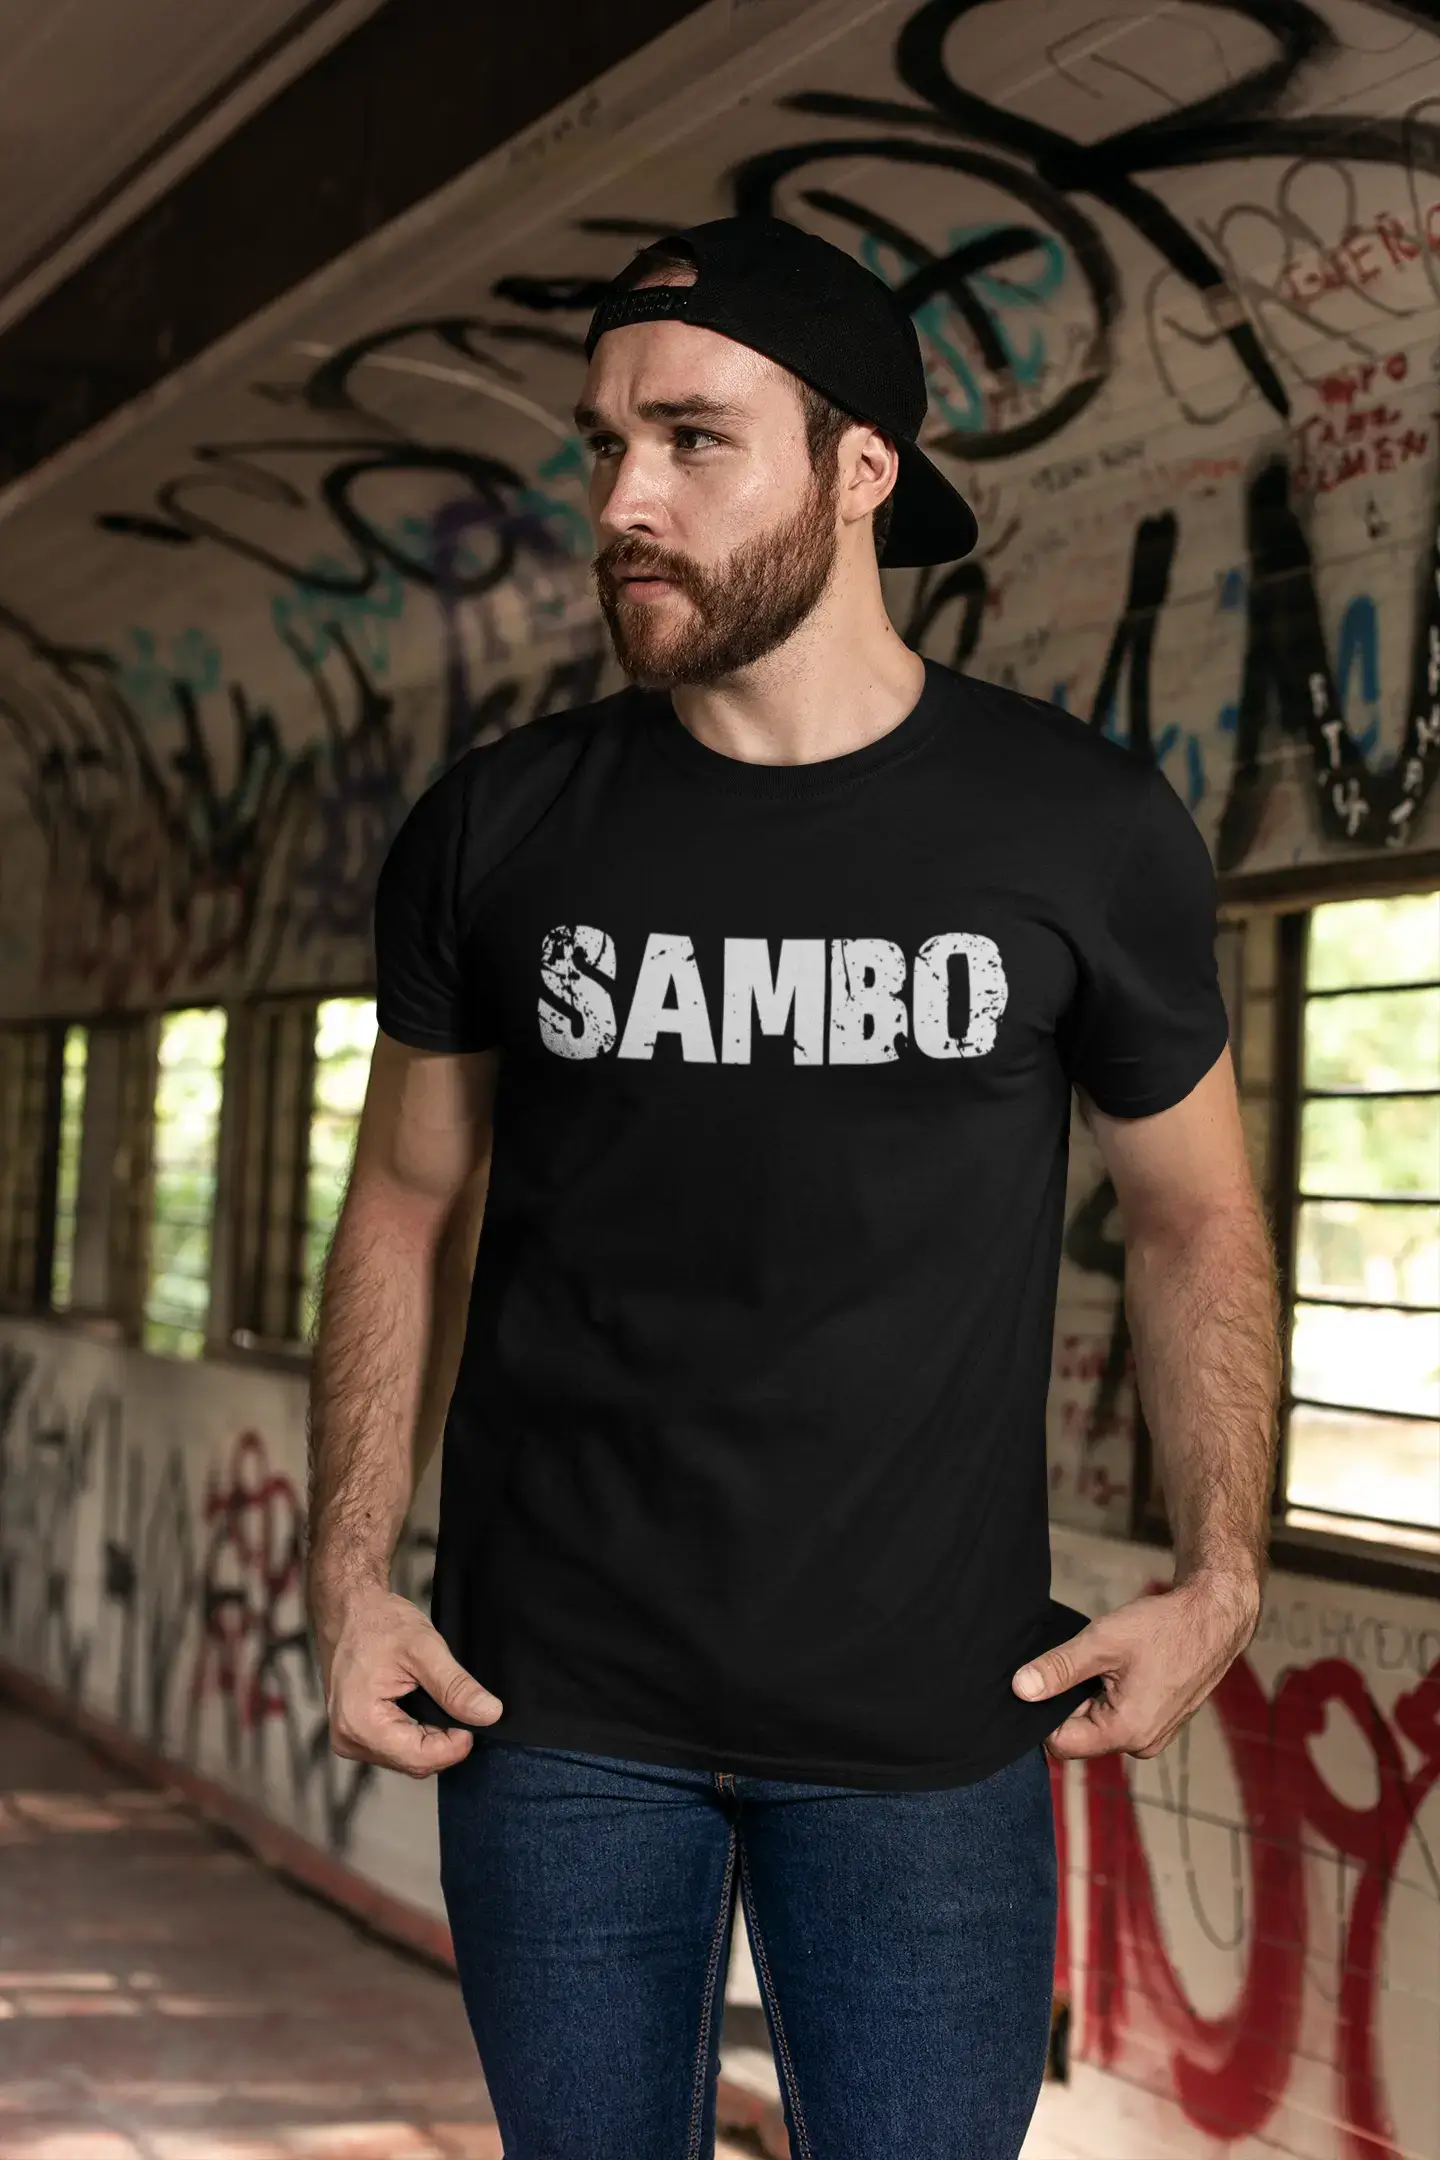 Sambo Herren Retro T-Shirt Schwarz Geburtstagsgeschenk 00553